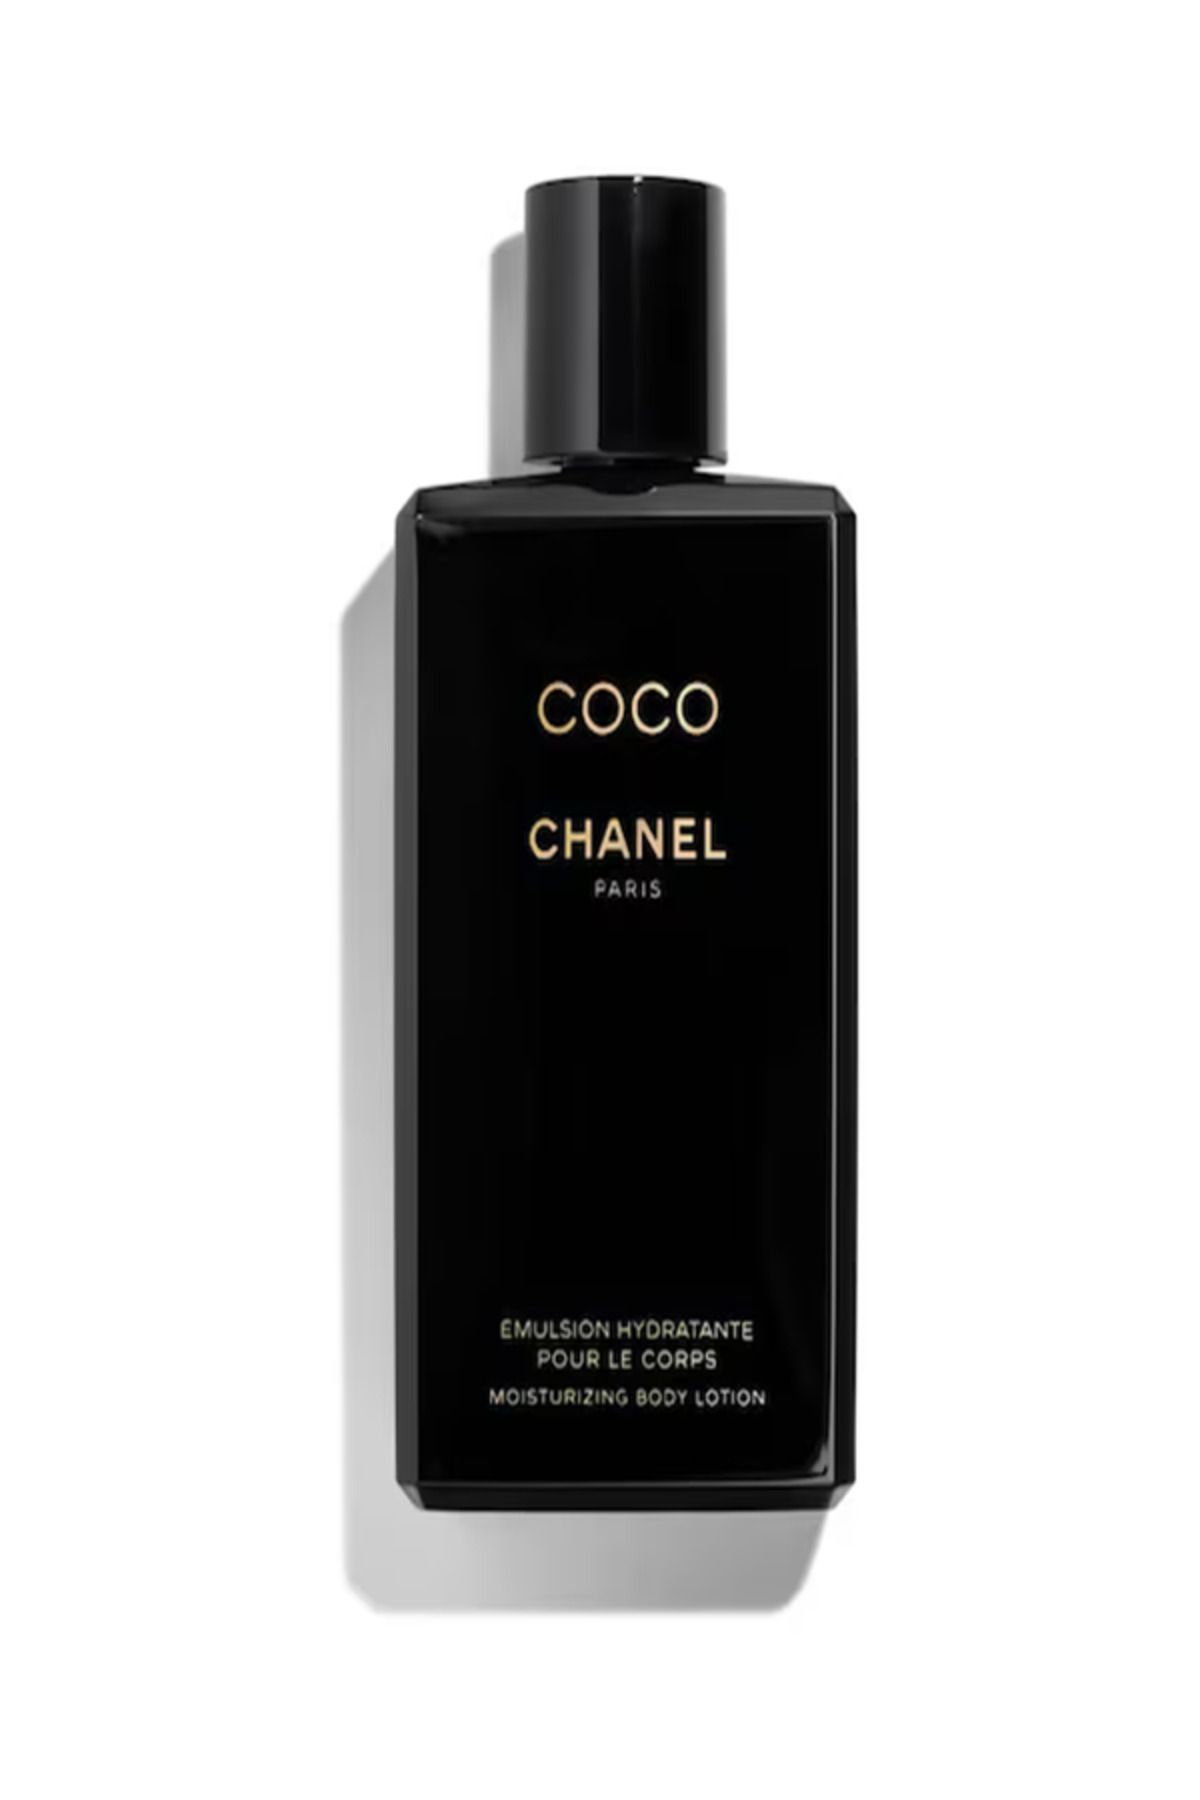 Chanel COCO Nemlendirici Vücut Losyonu-200ml